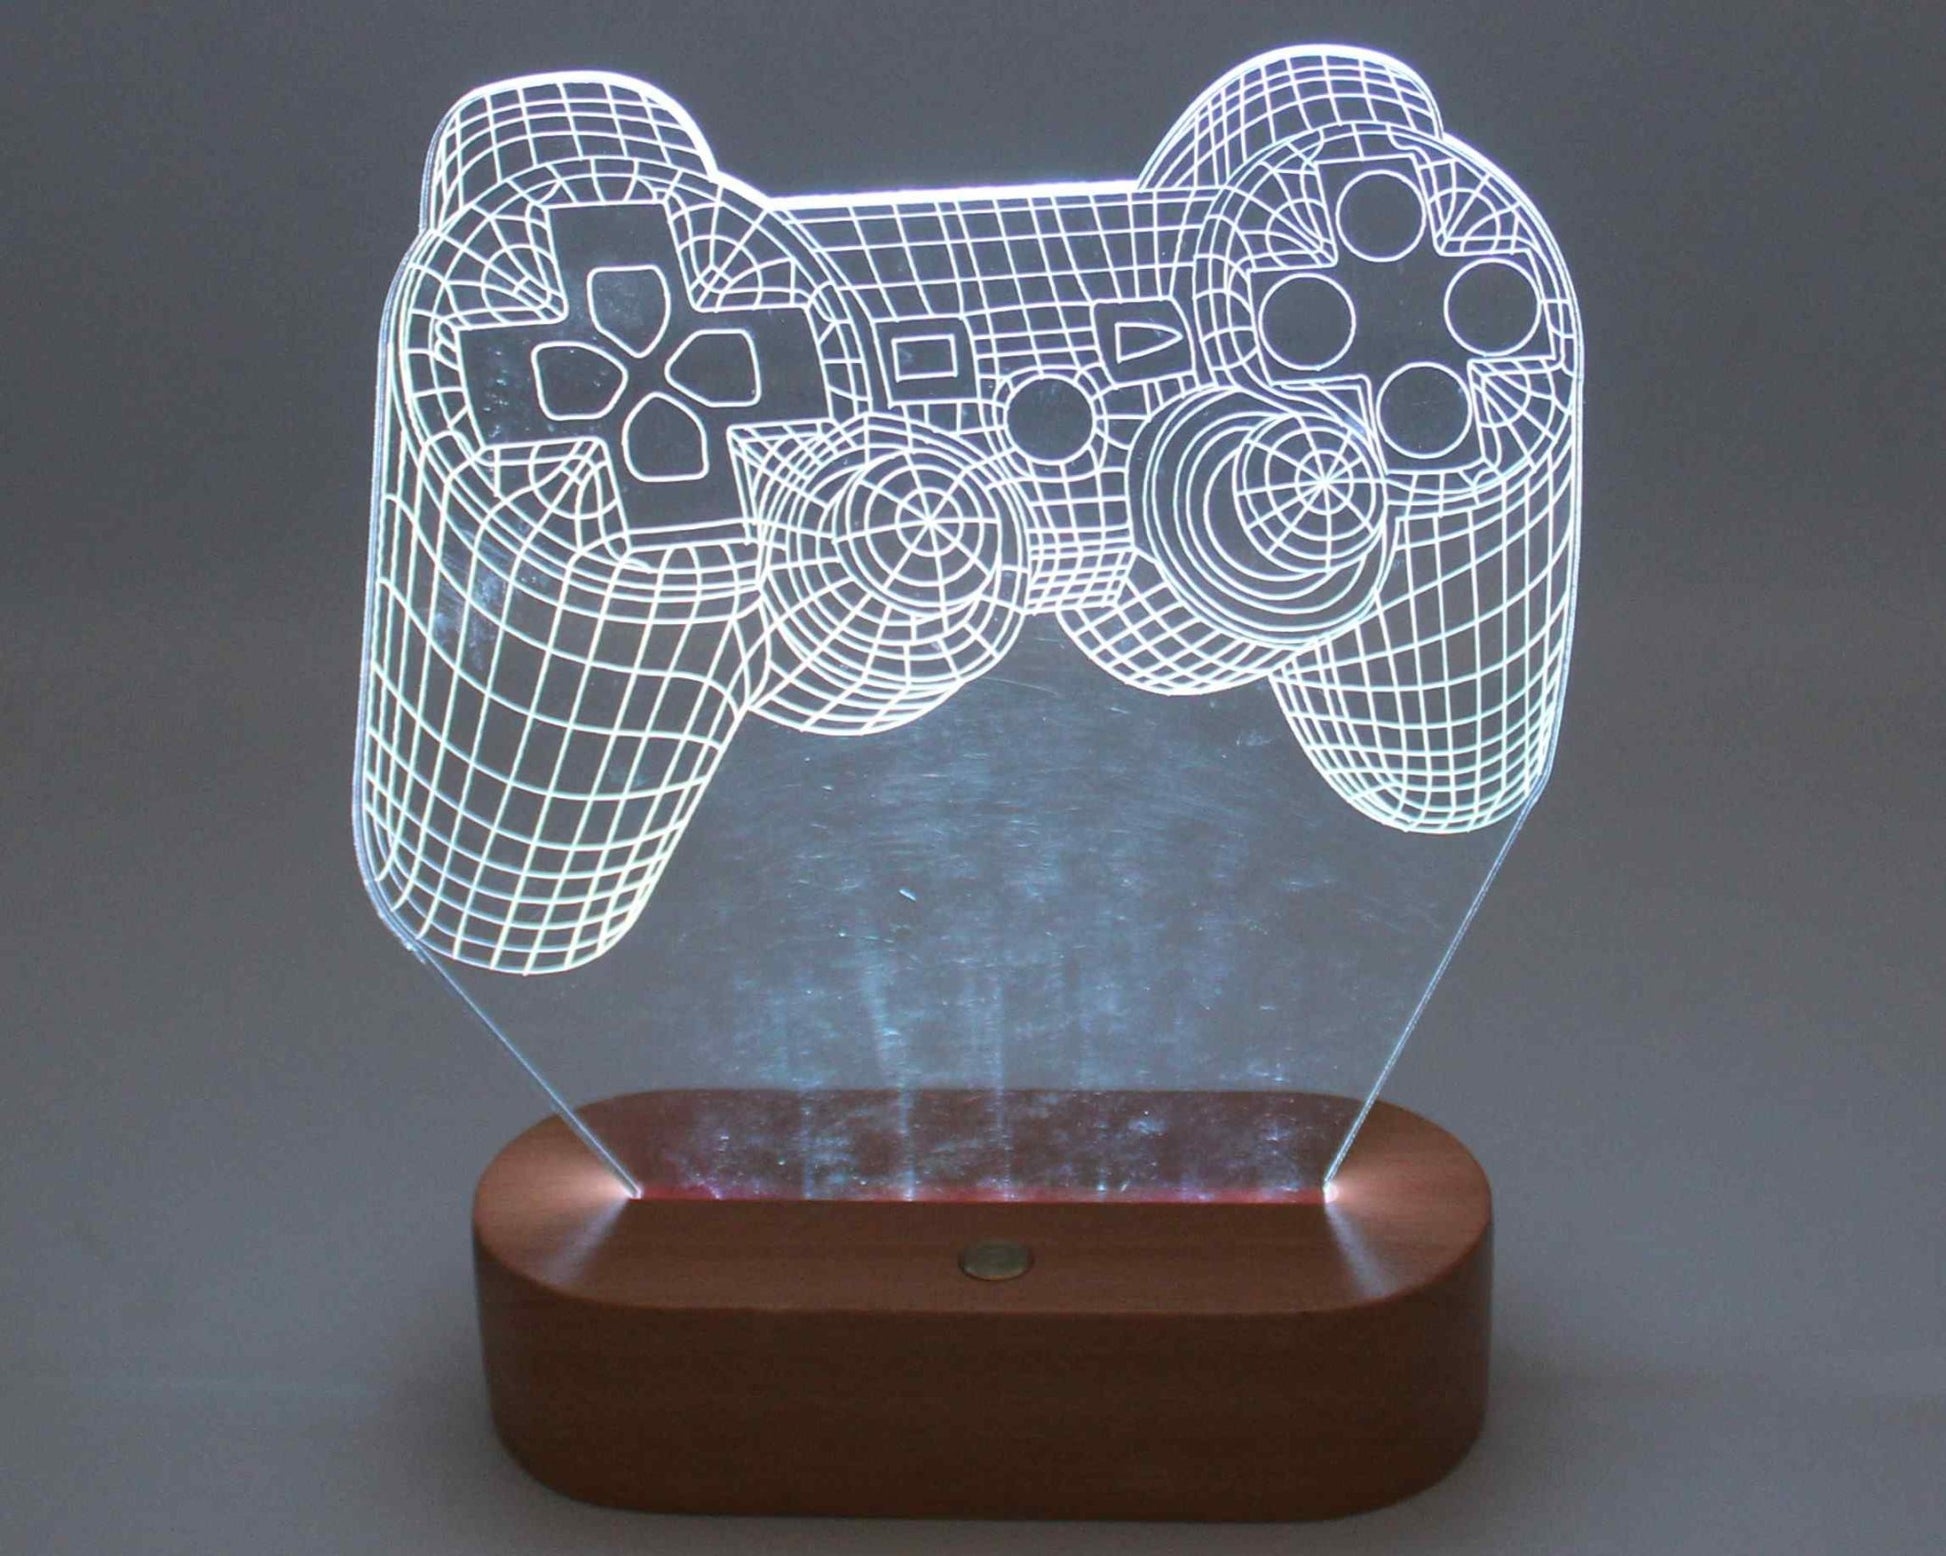 PlayStation controller 3D Illusion Night Light - Haisley Design